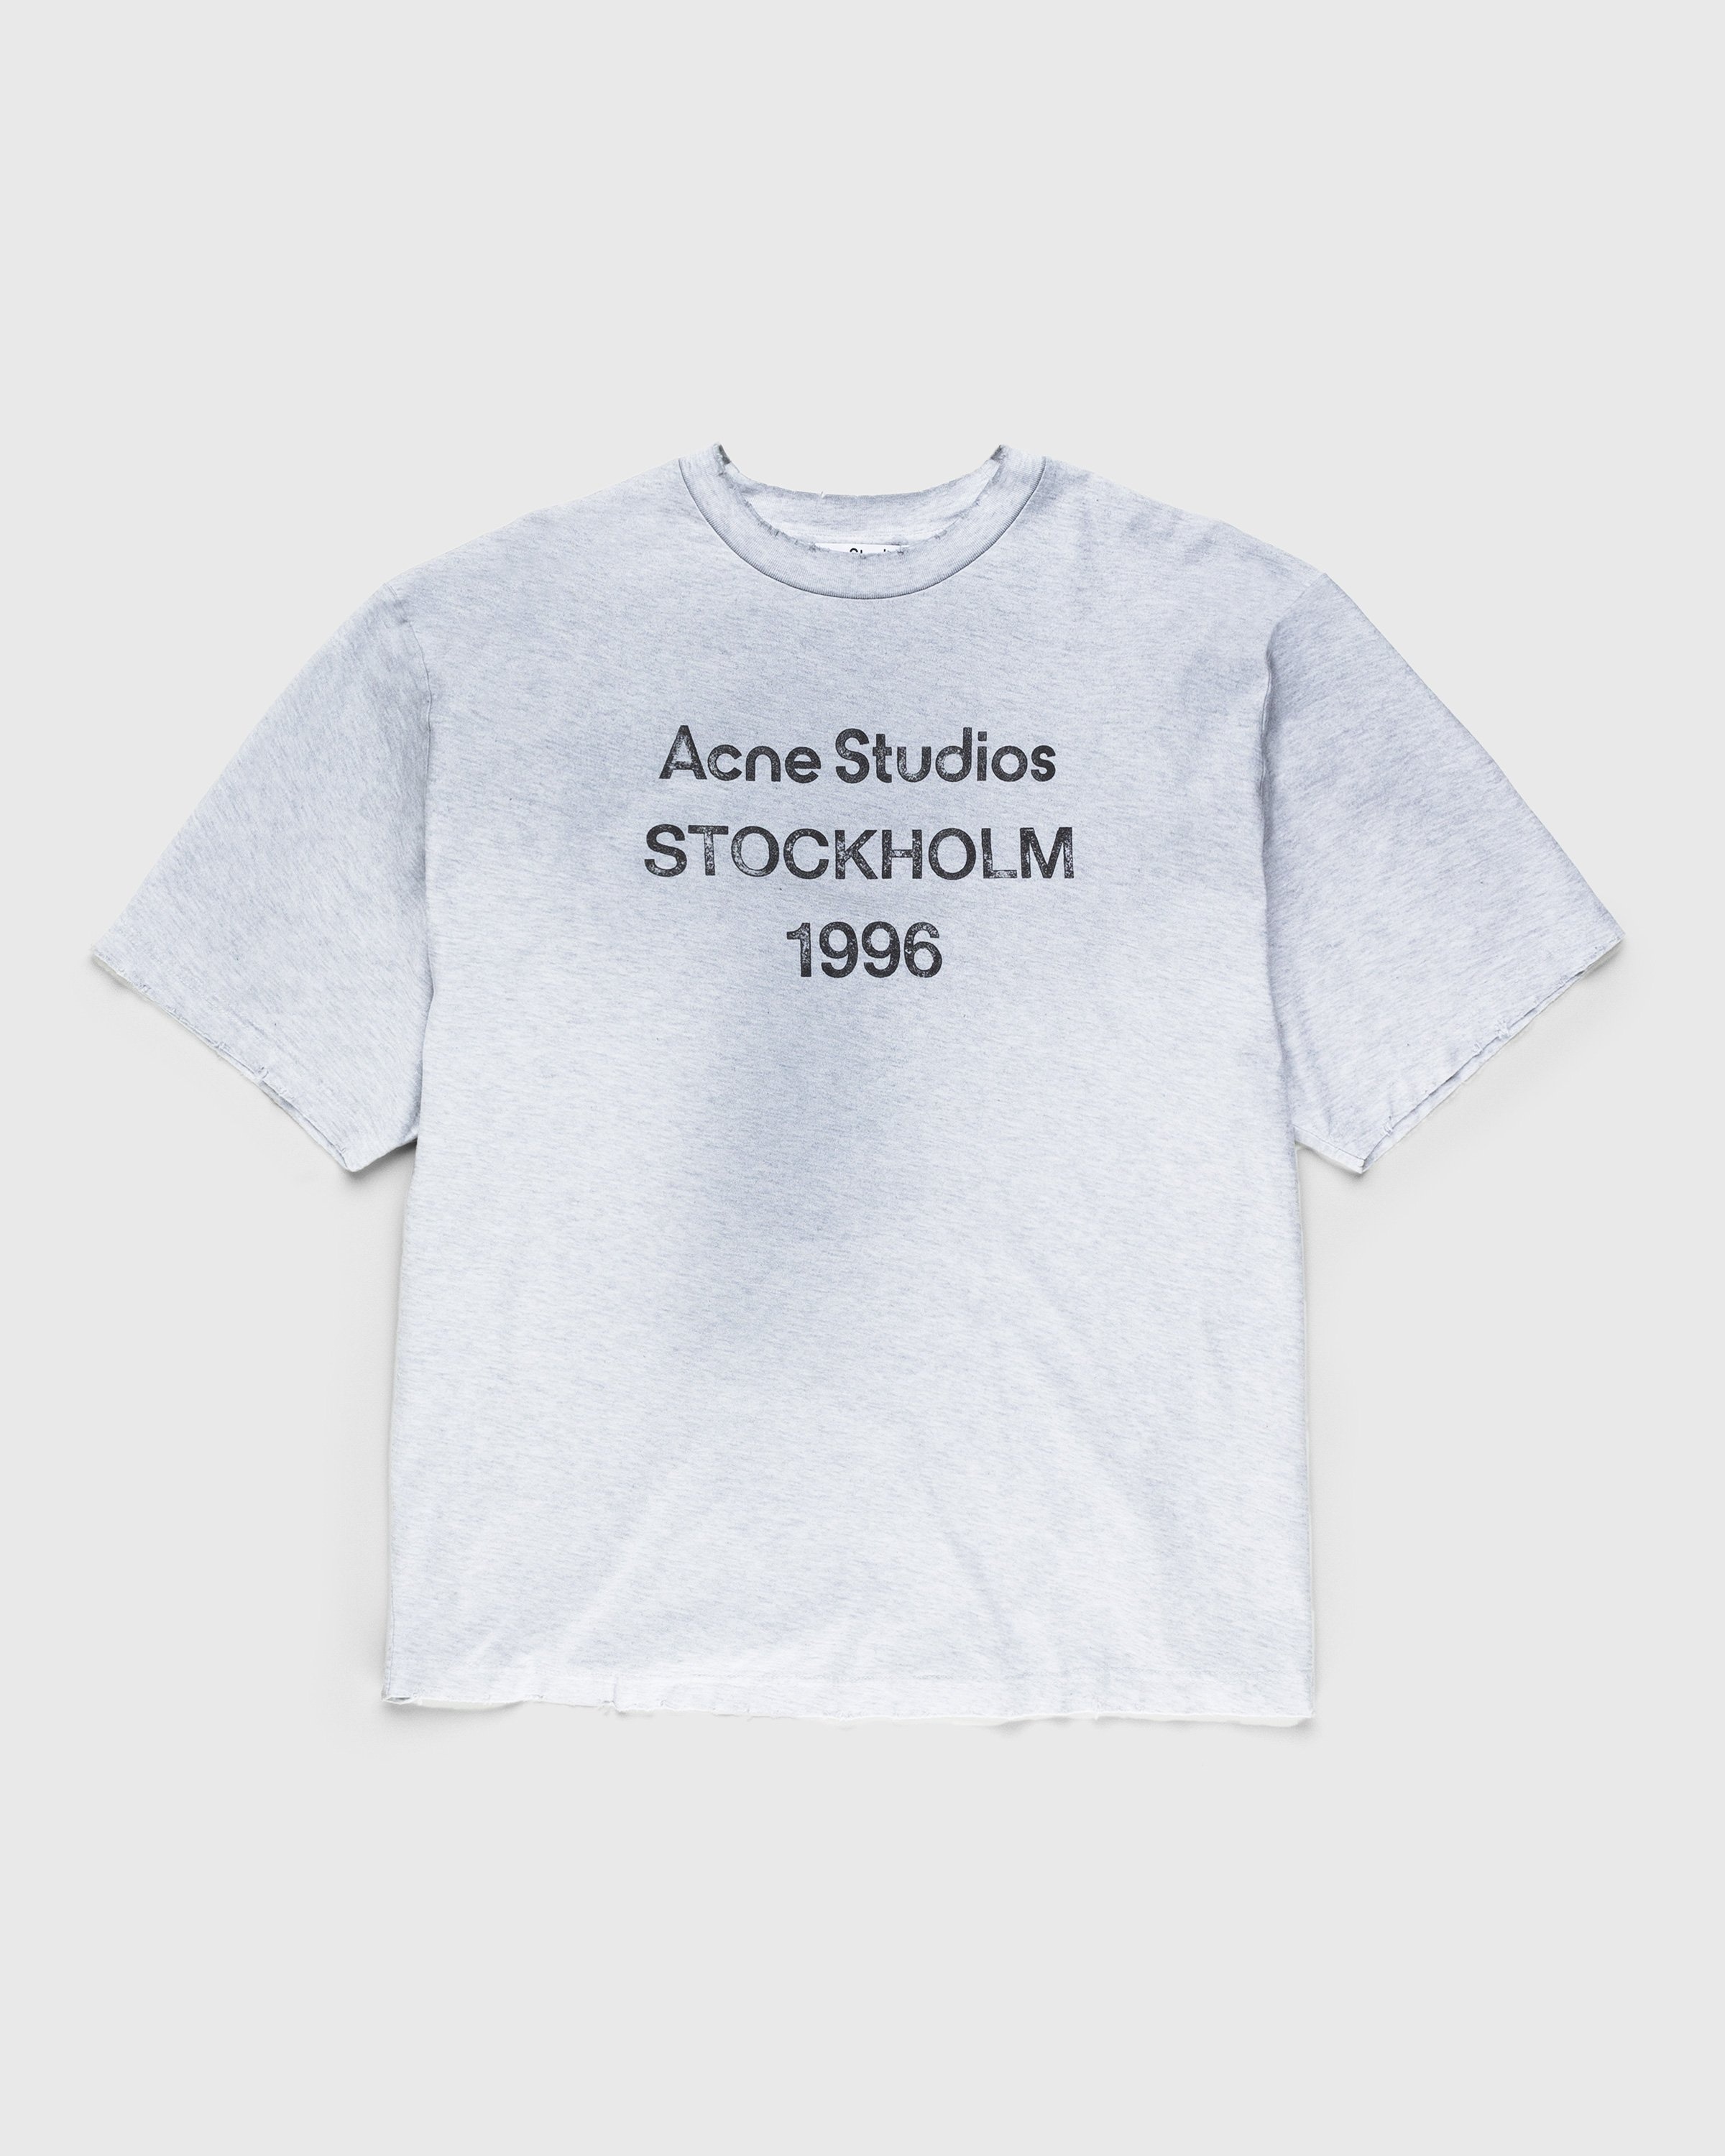 Acne Studios – Stockholm 1996 T-Shirt Grey - T-Shirts - Grey - Image 1